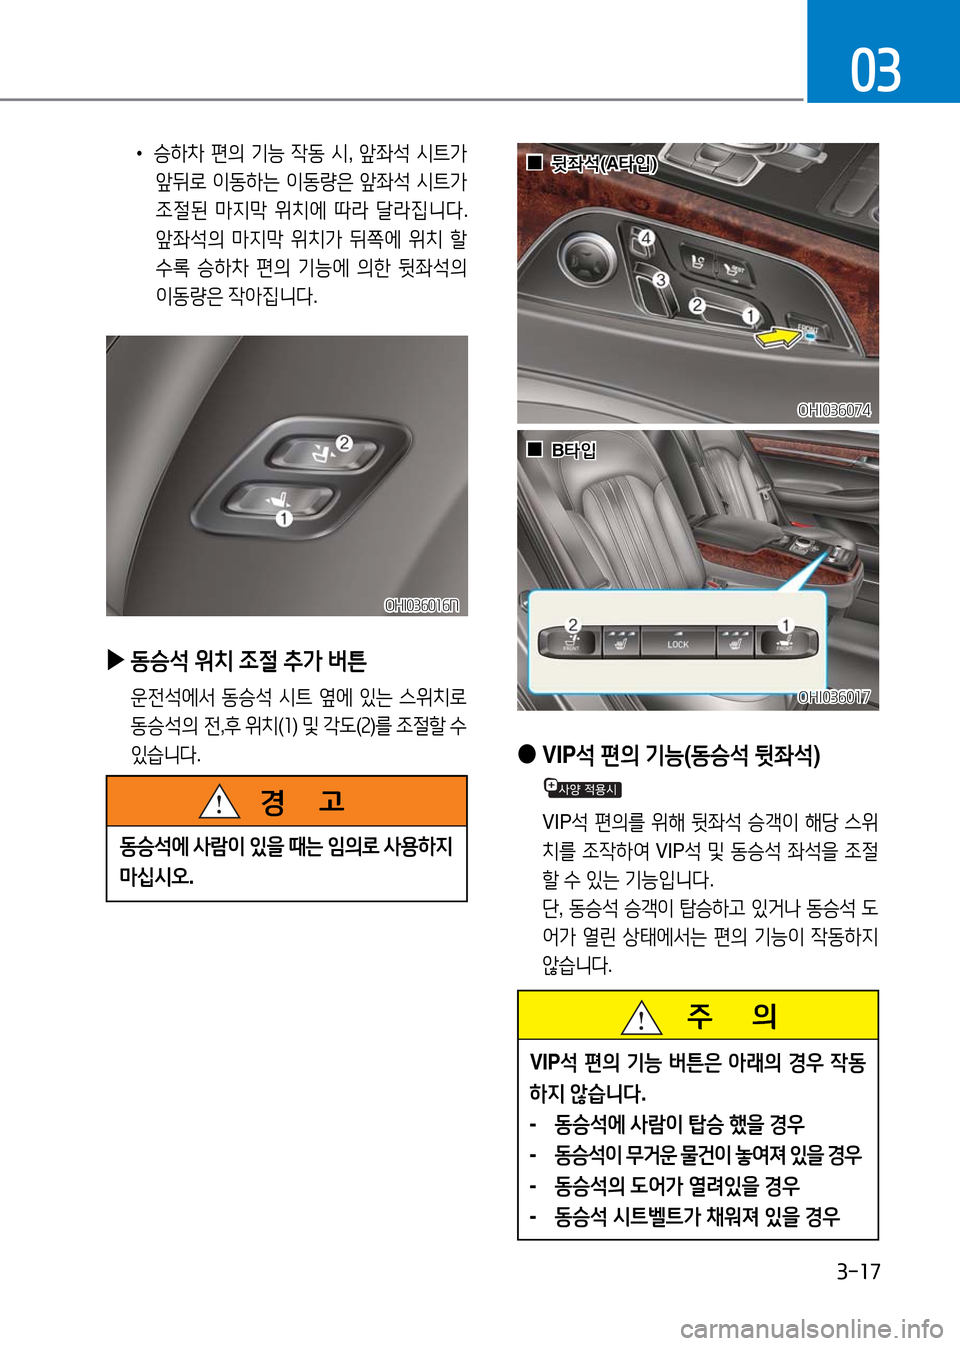 Hyundai Genesis 2016  EQ900 HI - 사용 설명서 (in Korean) 3-17
03
OHI036016NOHI036016N
 ▶동승석 위치 조절 추가 버튼
 운전석에서 동승석 시트 옆에 있는 스위치로 
동승석의 전,후 위치(1) 및 각도(2)를 조절할 수 
있�